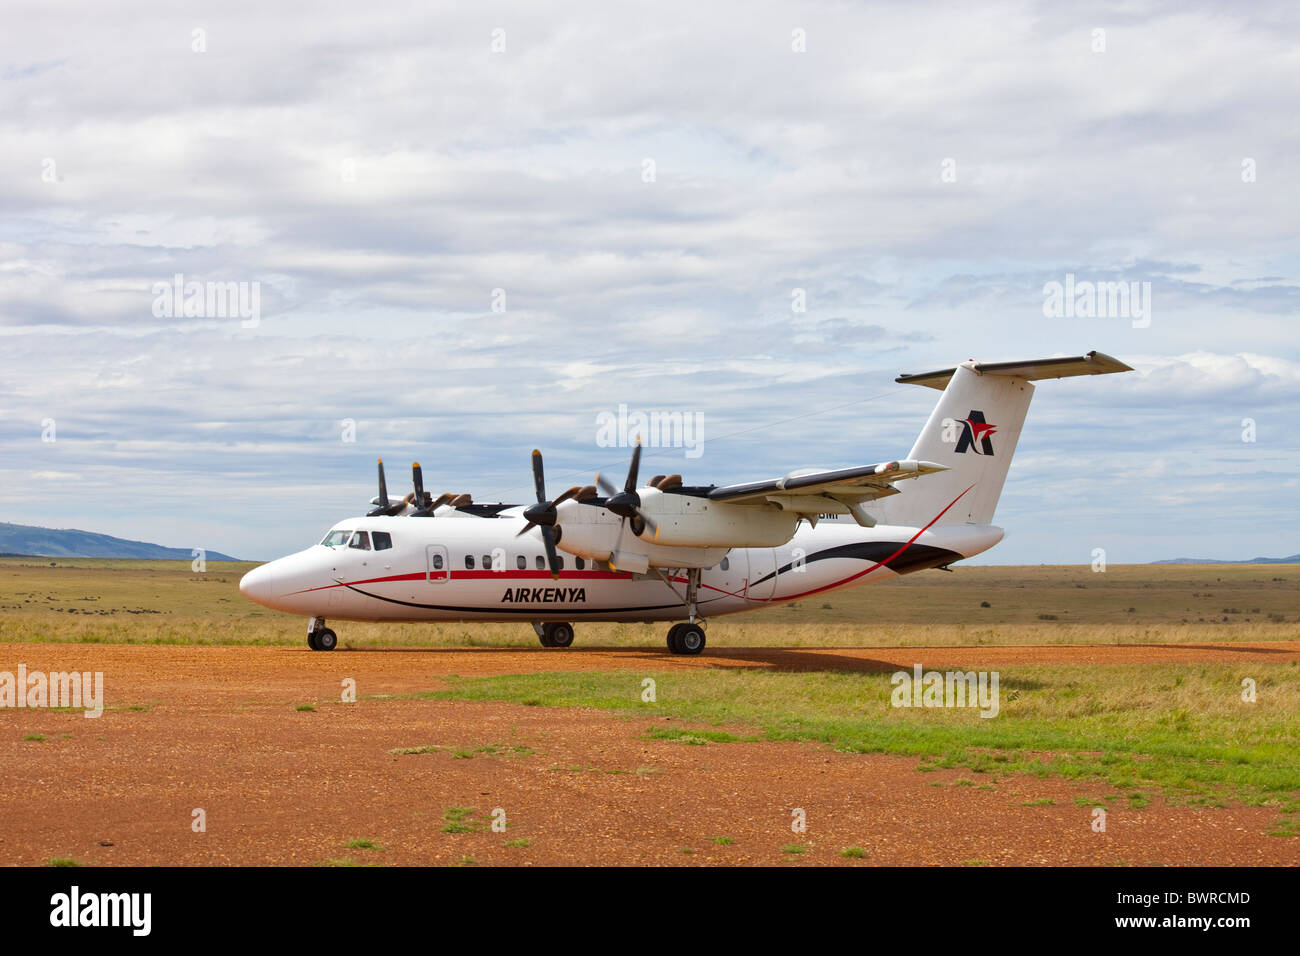 Air Kenya flight arriving in the Masai Mara, bringing tourists for ...